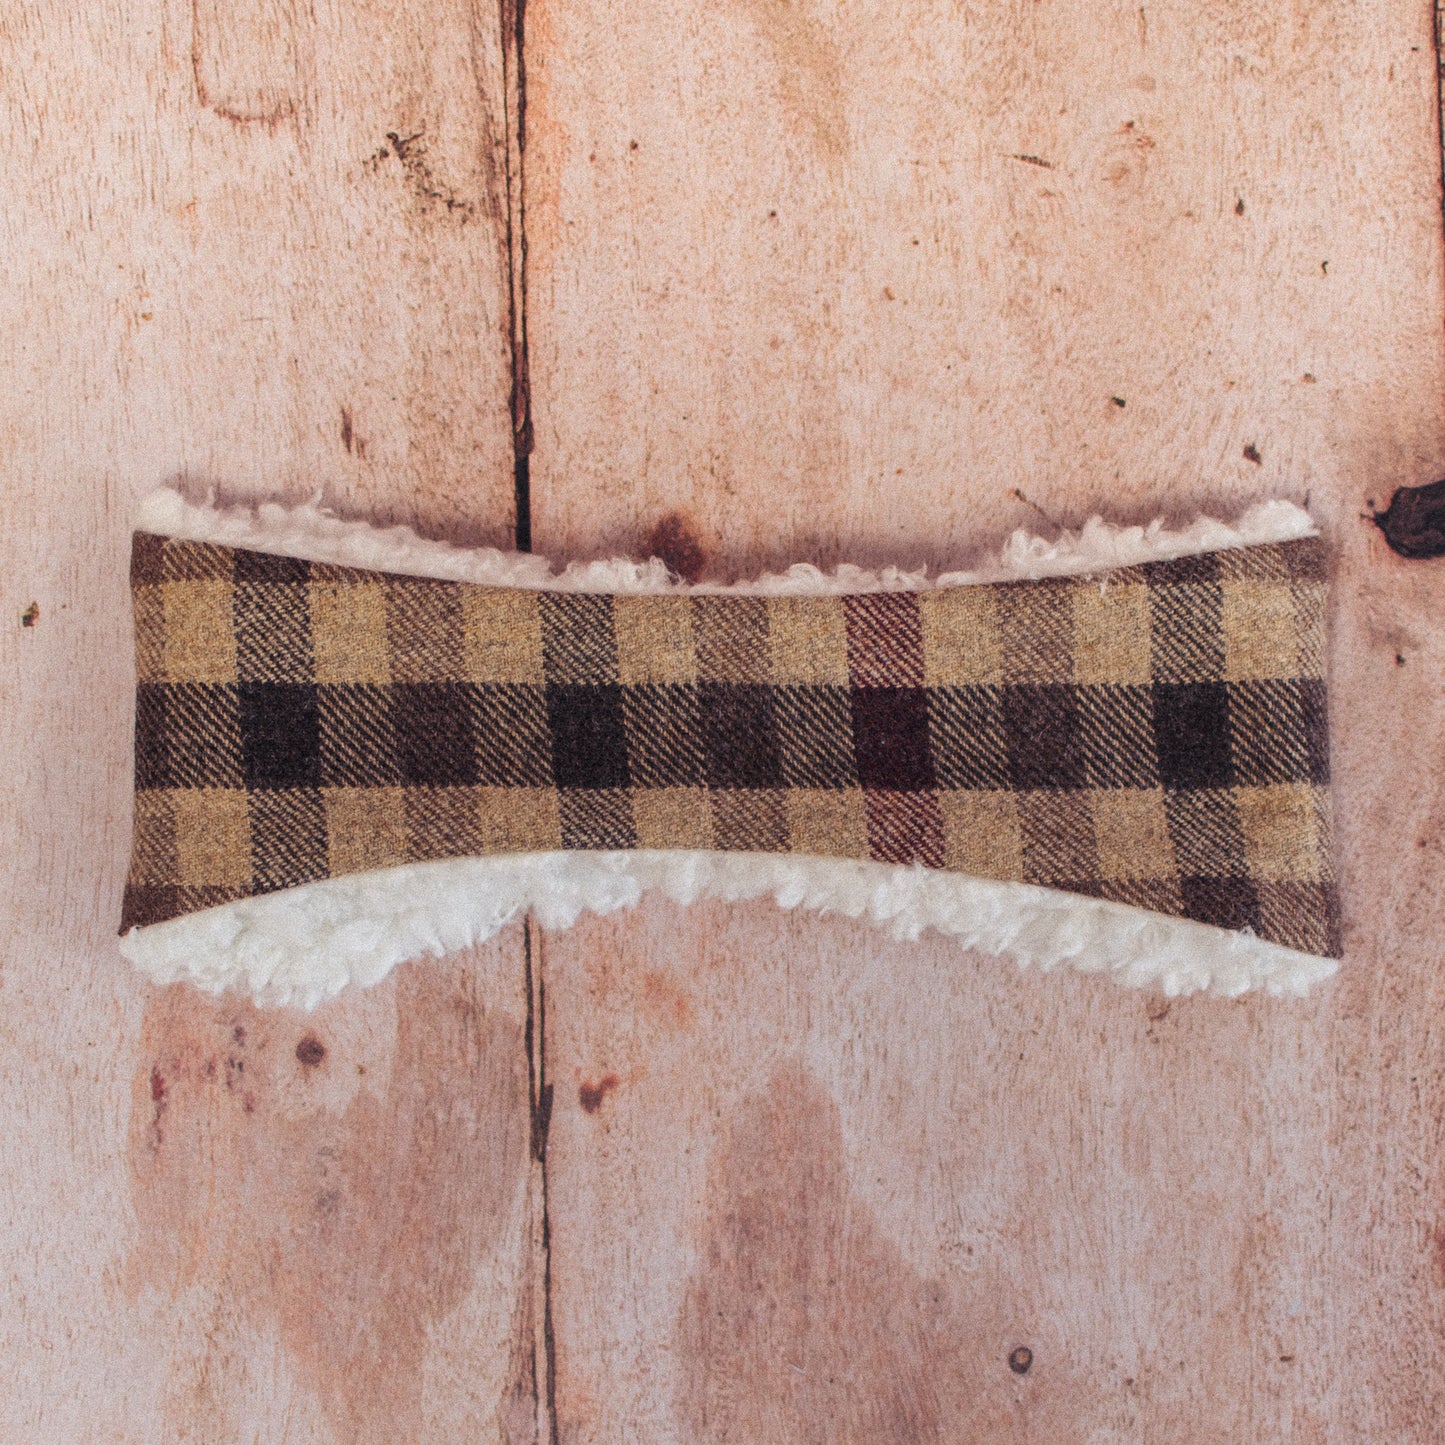 Haweswater Tweed Head Warmer - F&B Crafts - F&B Handmade